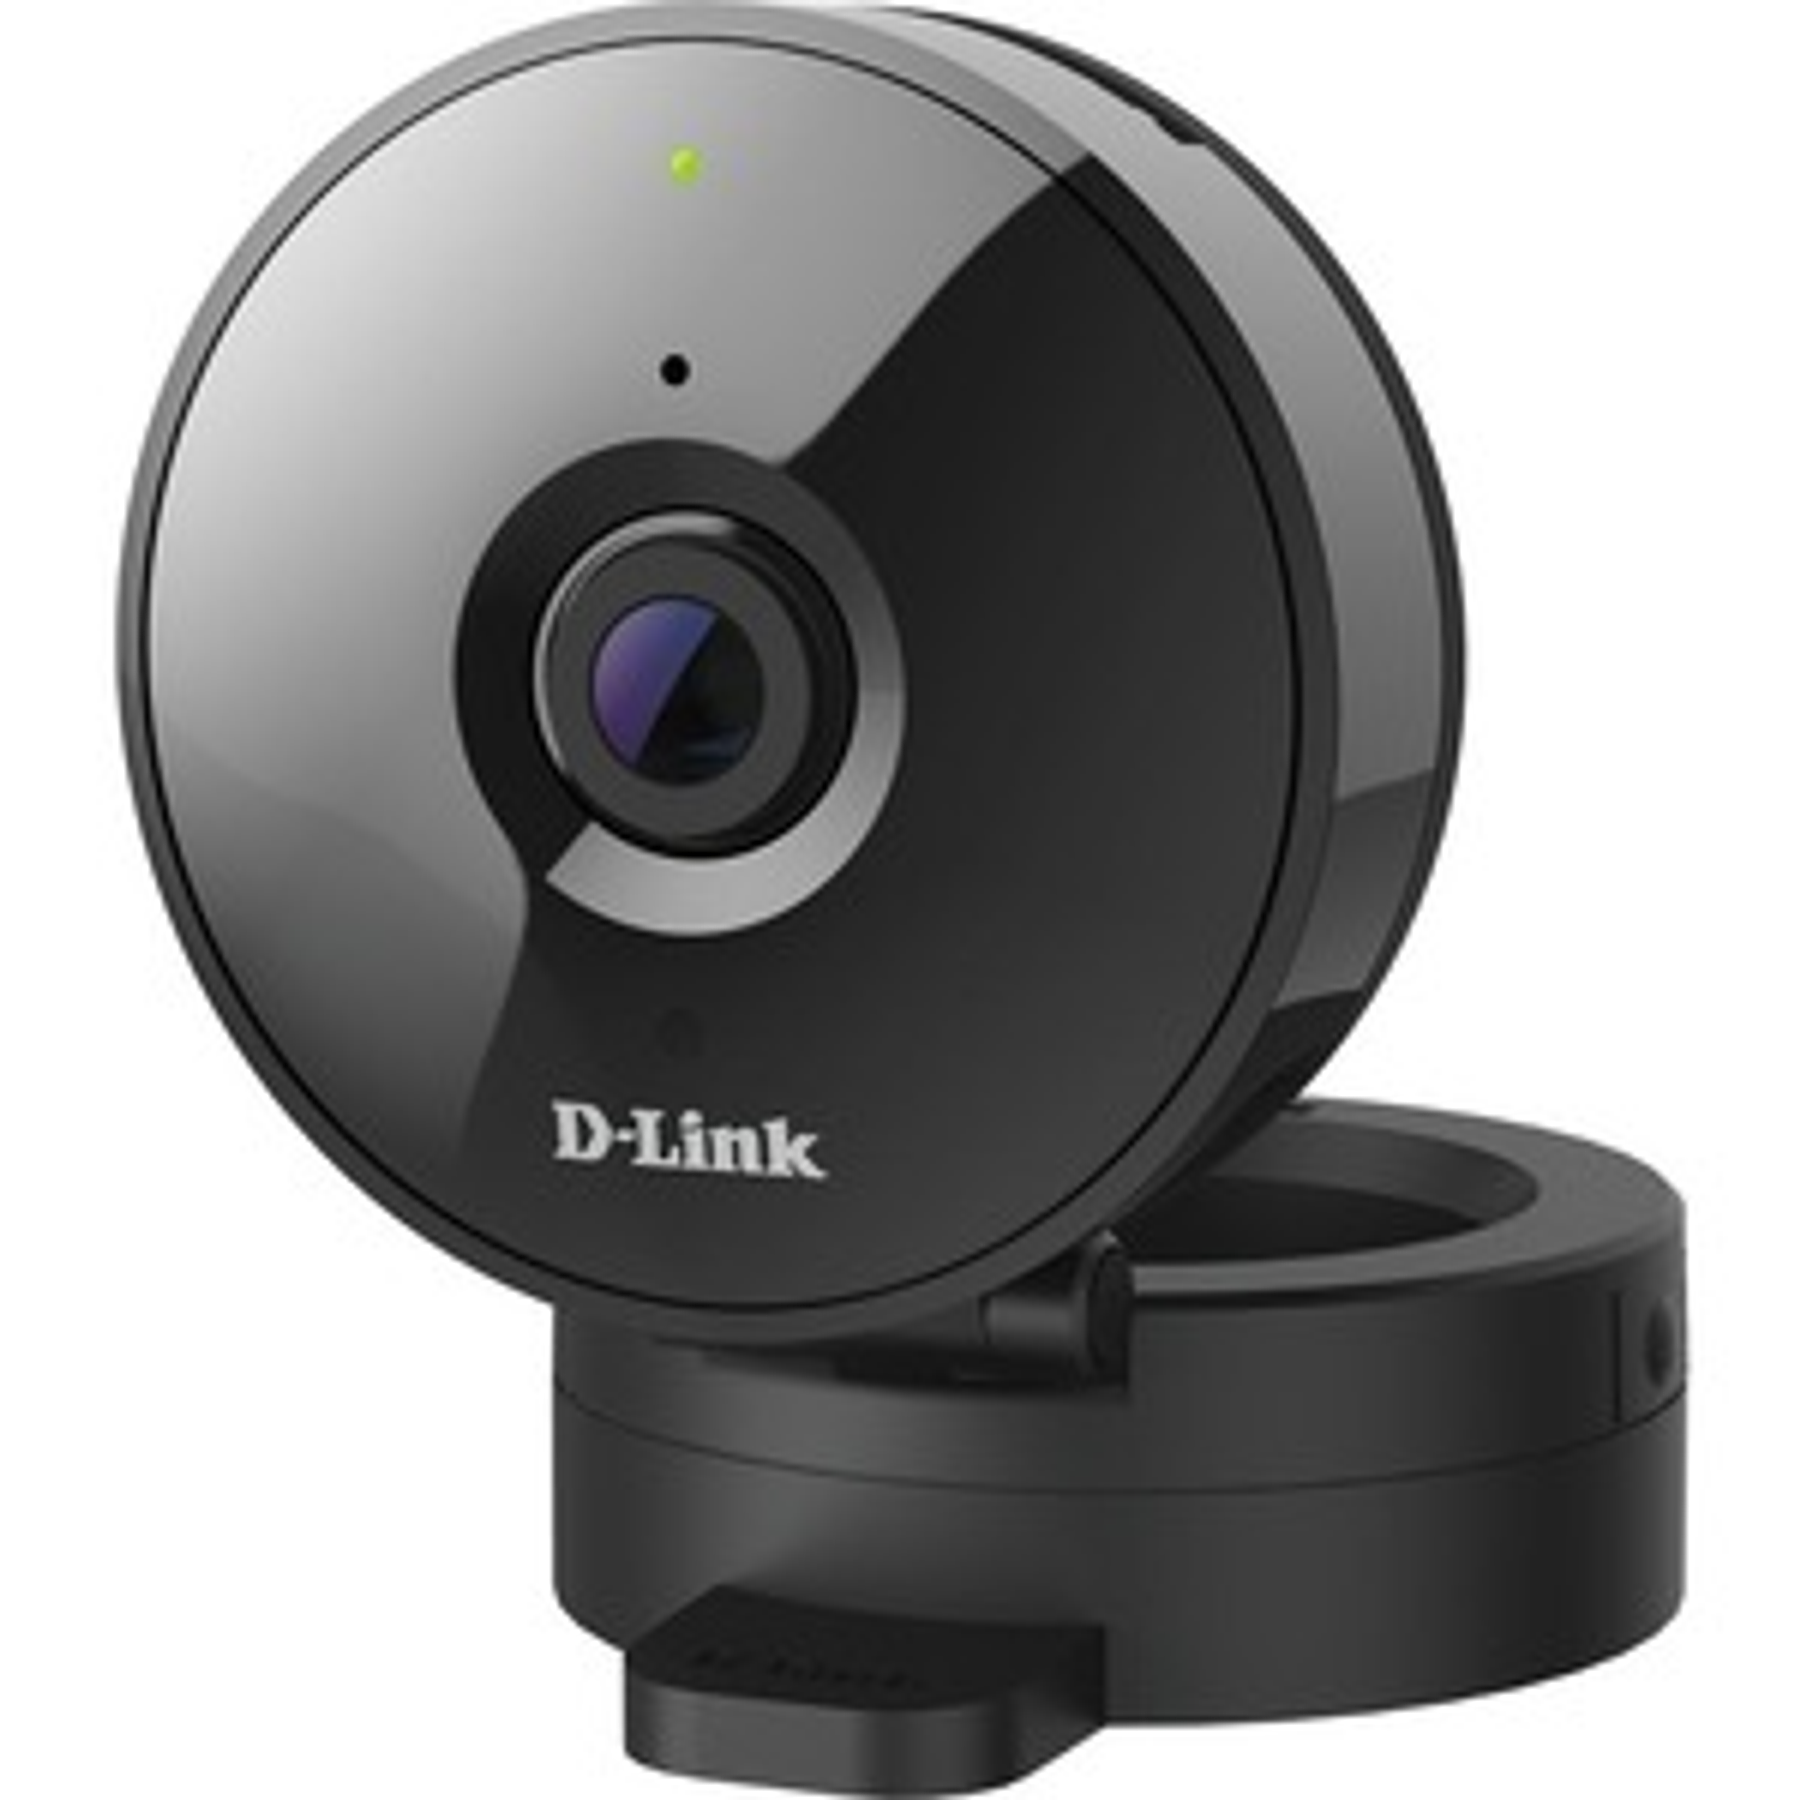  D-Link  HD Wi-Fi Day/night Camera 1280x720 